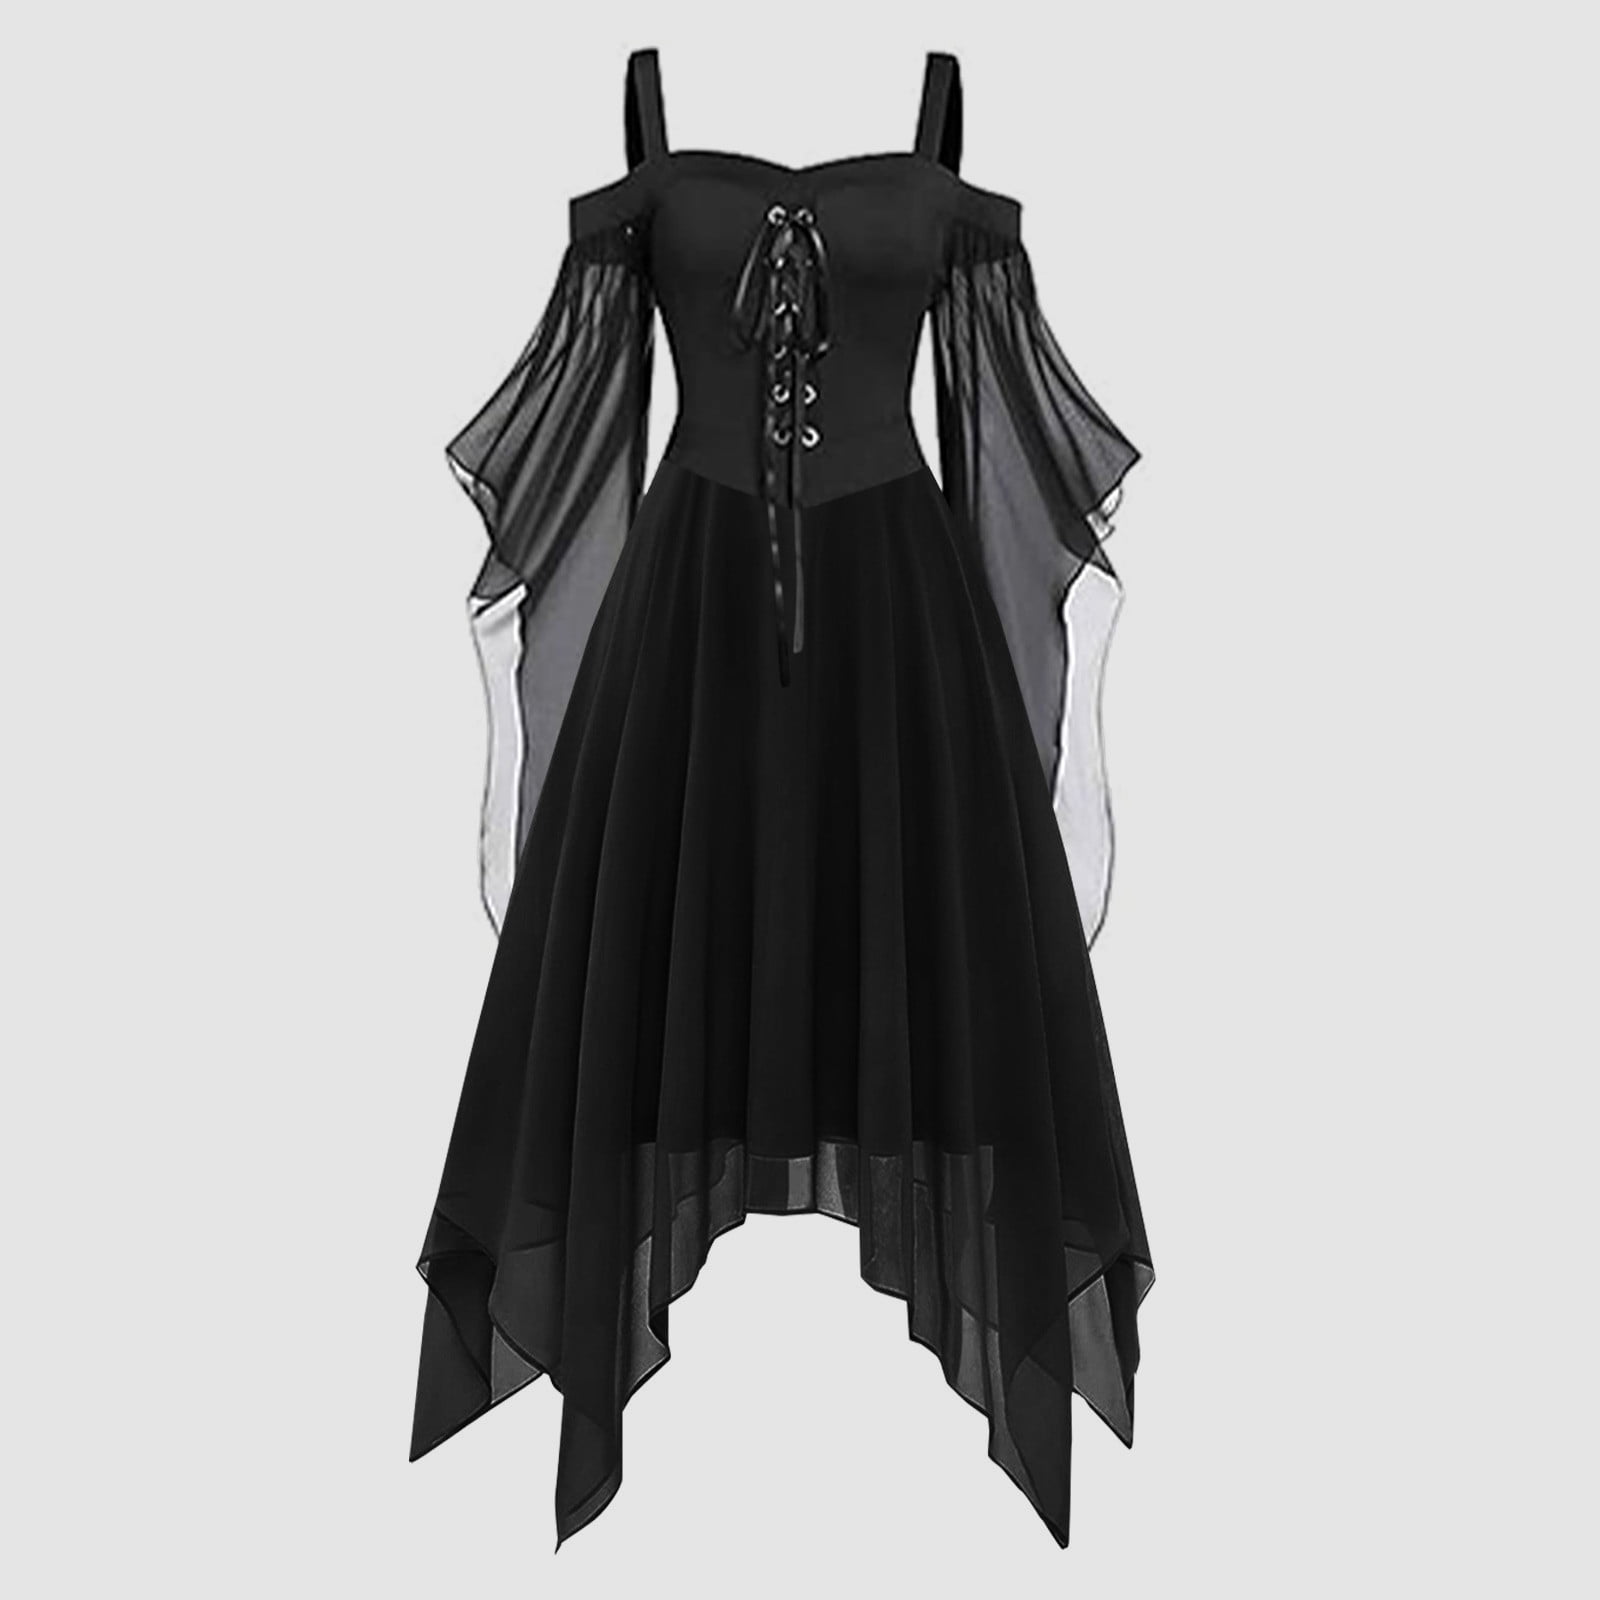 UIX Cocktail Dresses for Women Plus Size Fashion Gothic Style Vintage ...